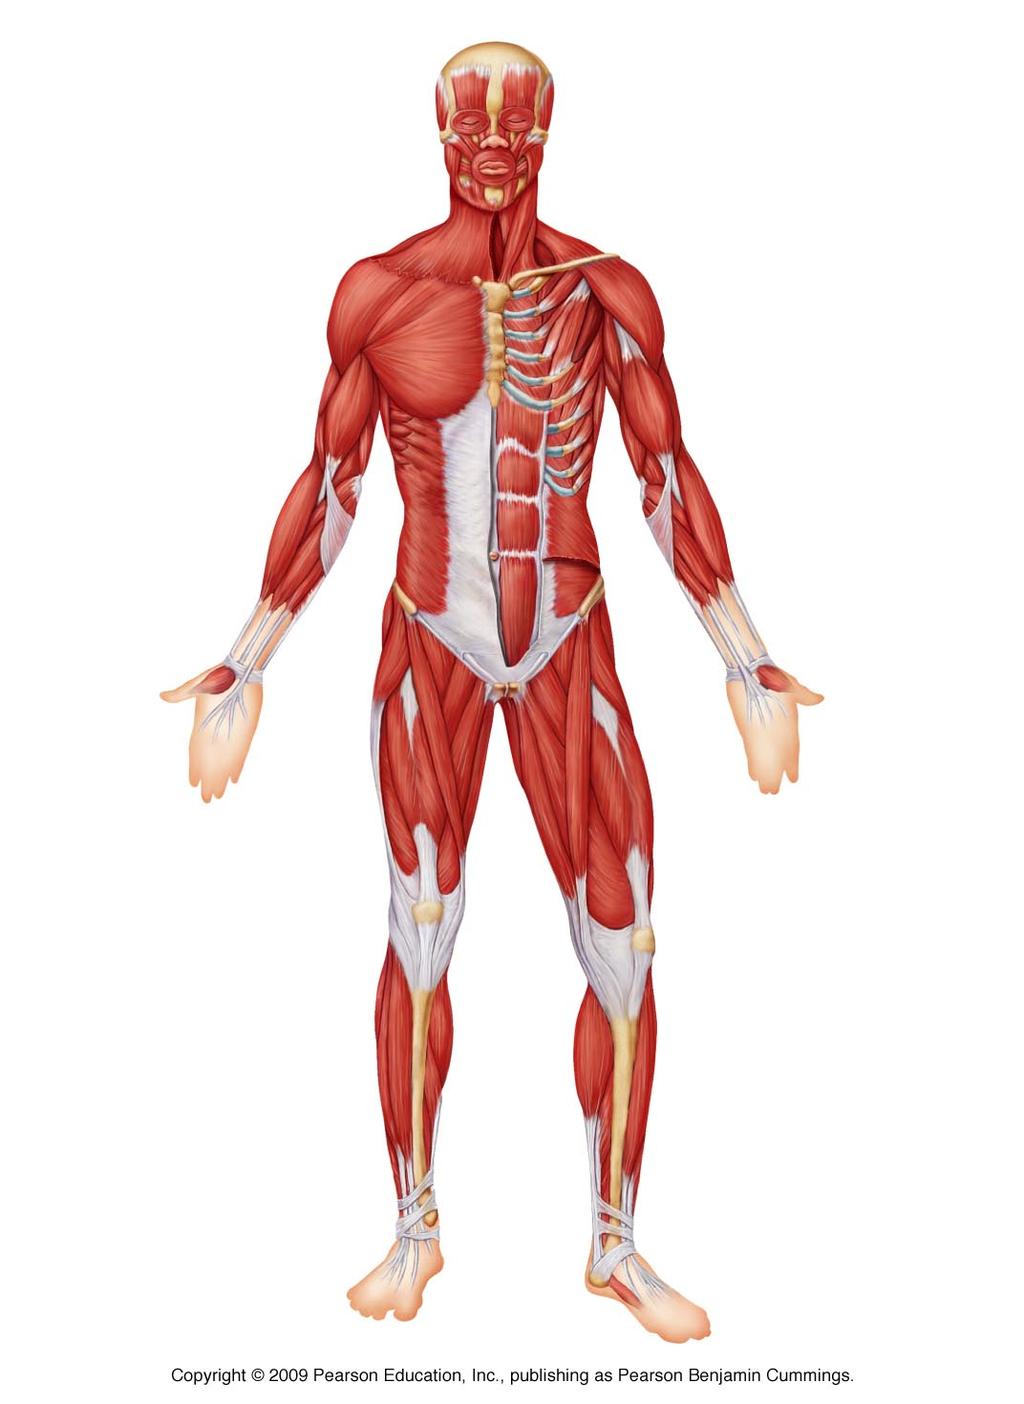 3. Muscular system: Organ - Skeletal muscles.